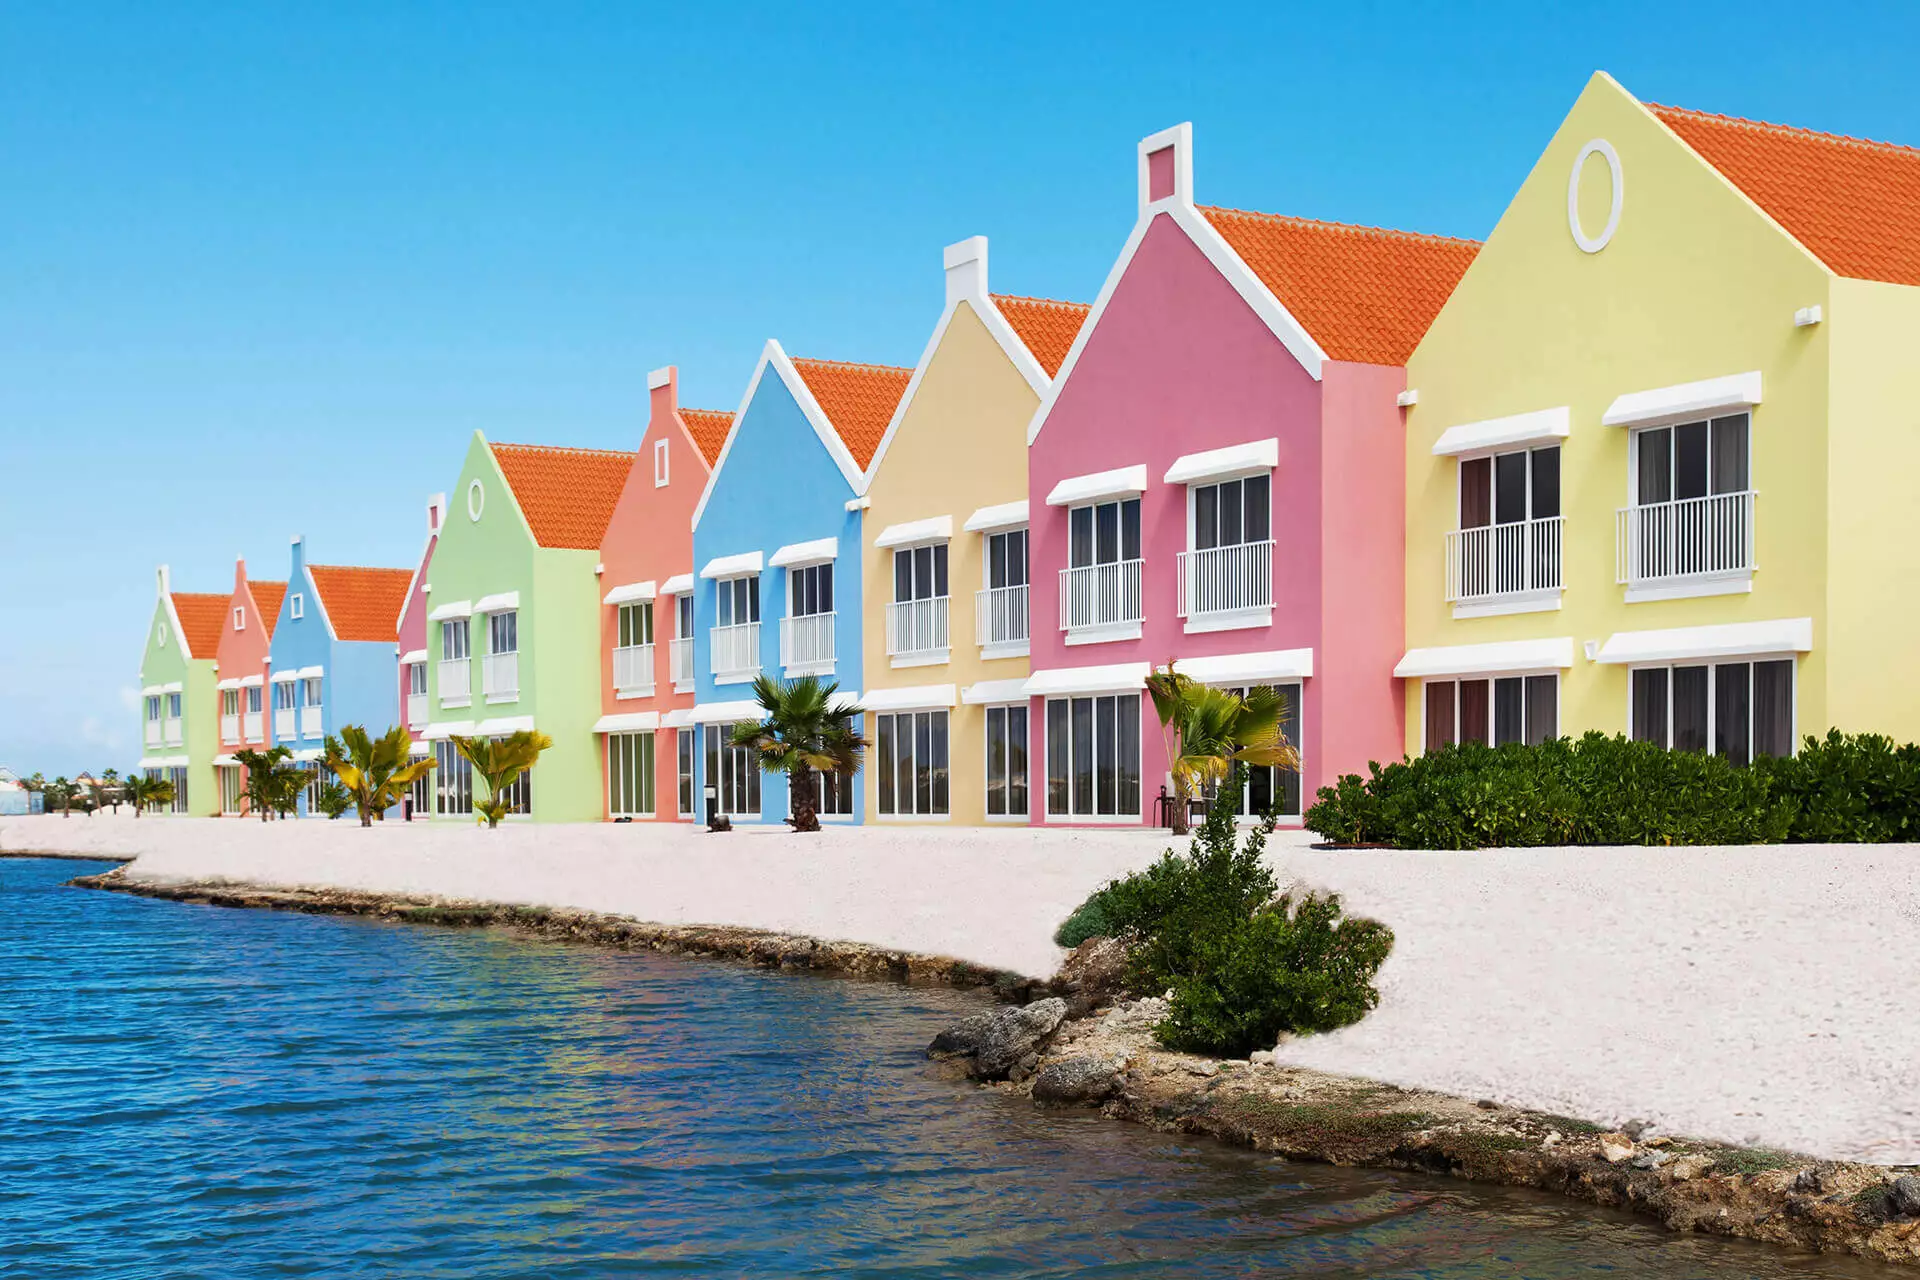 locuinte insula secreta Bonaire